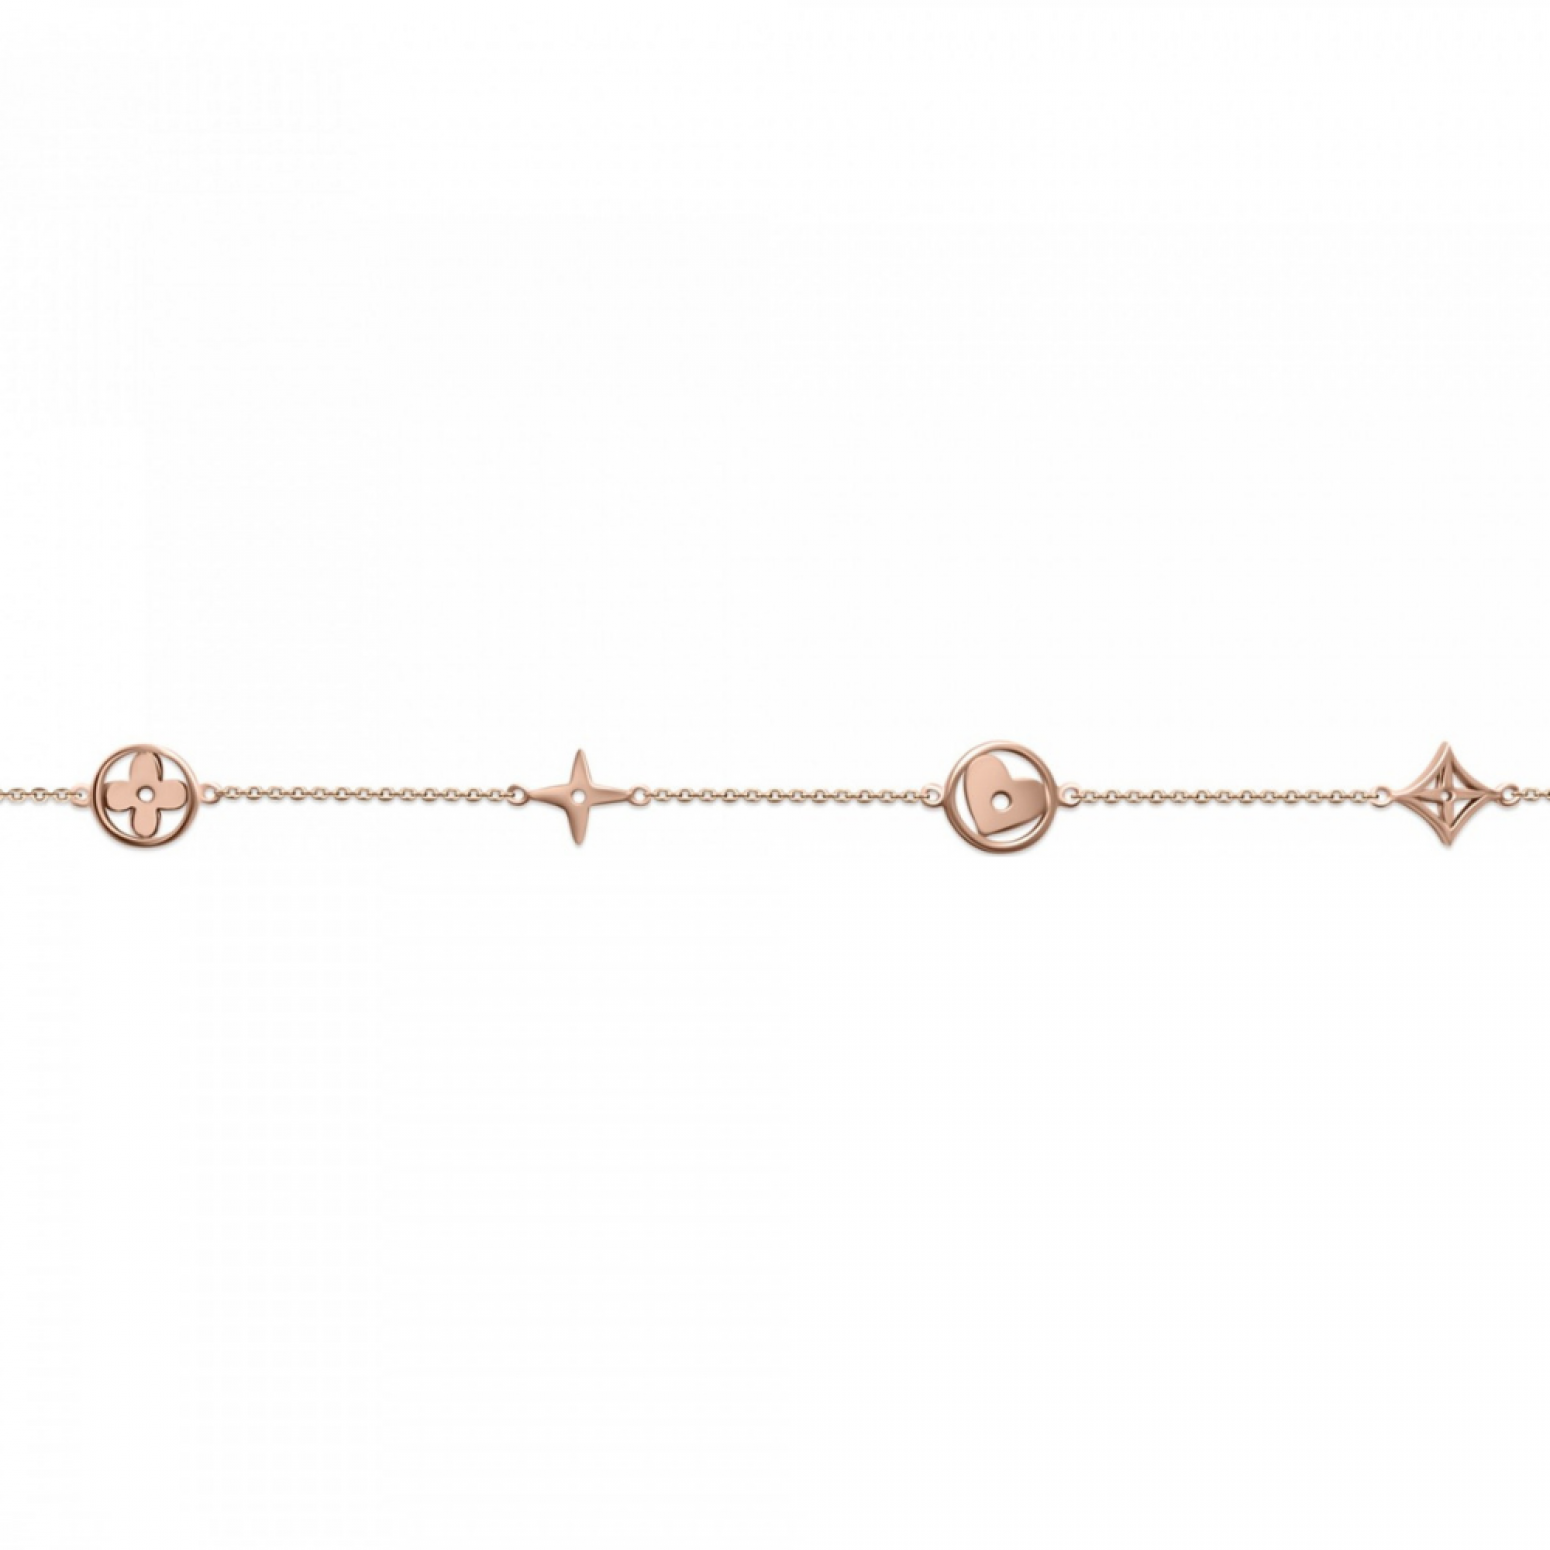 Bracelet Κ9 pink gold, br1509 BRACELETS Κοσμηματα - chrilia.gr